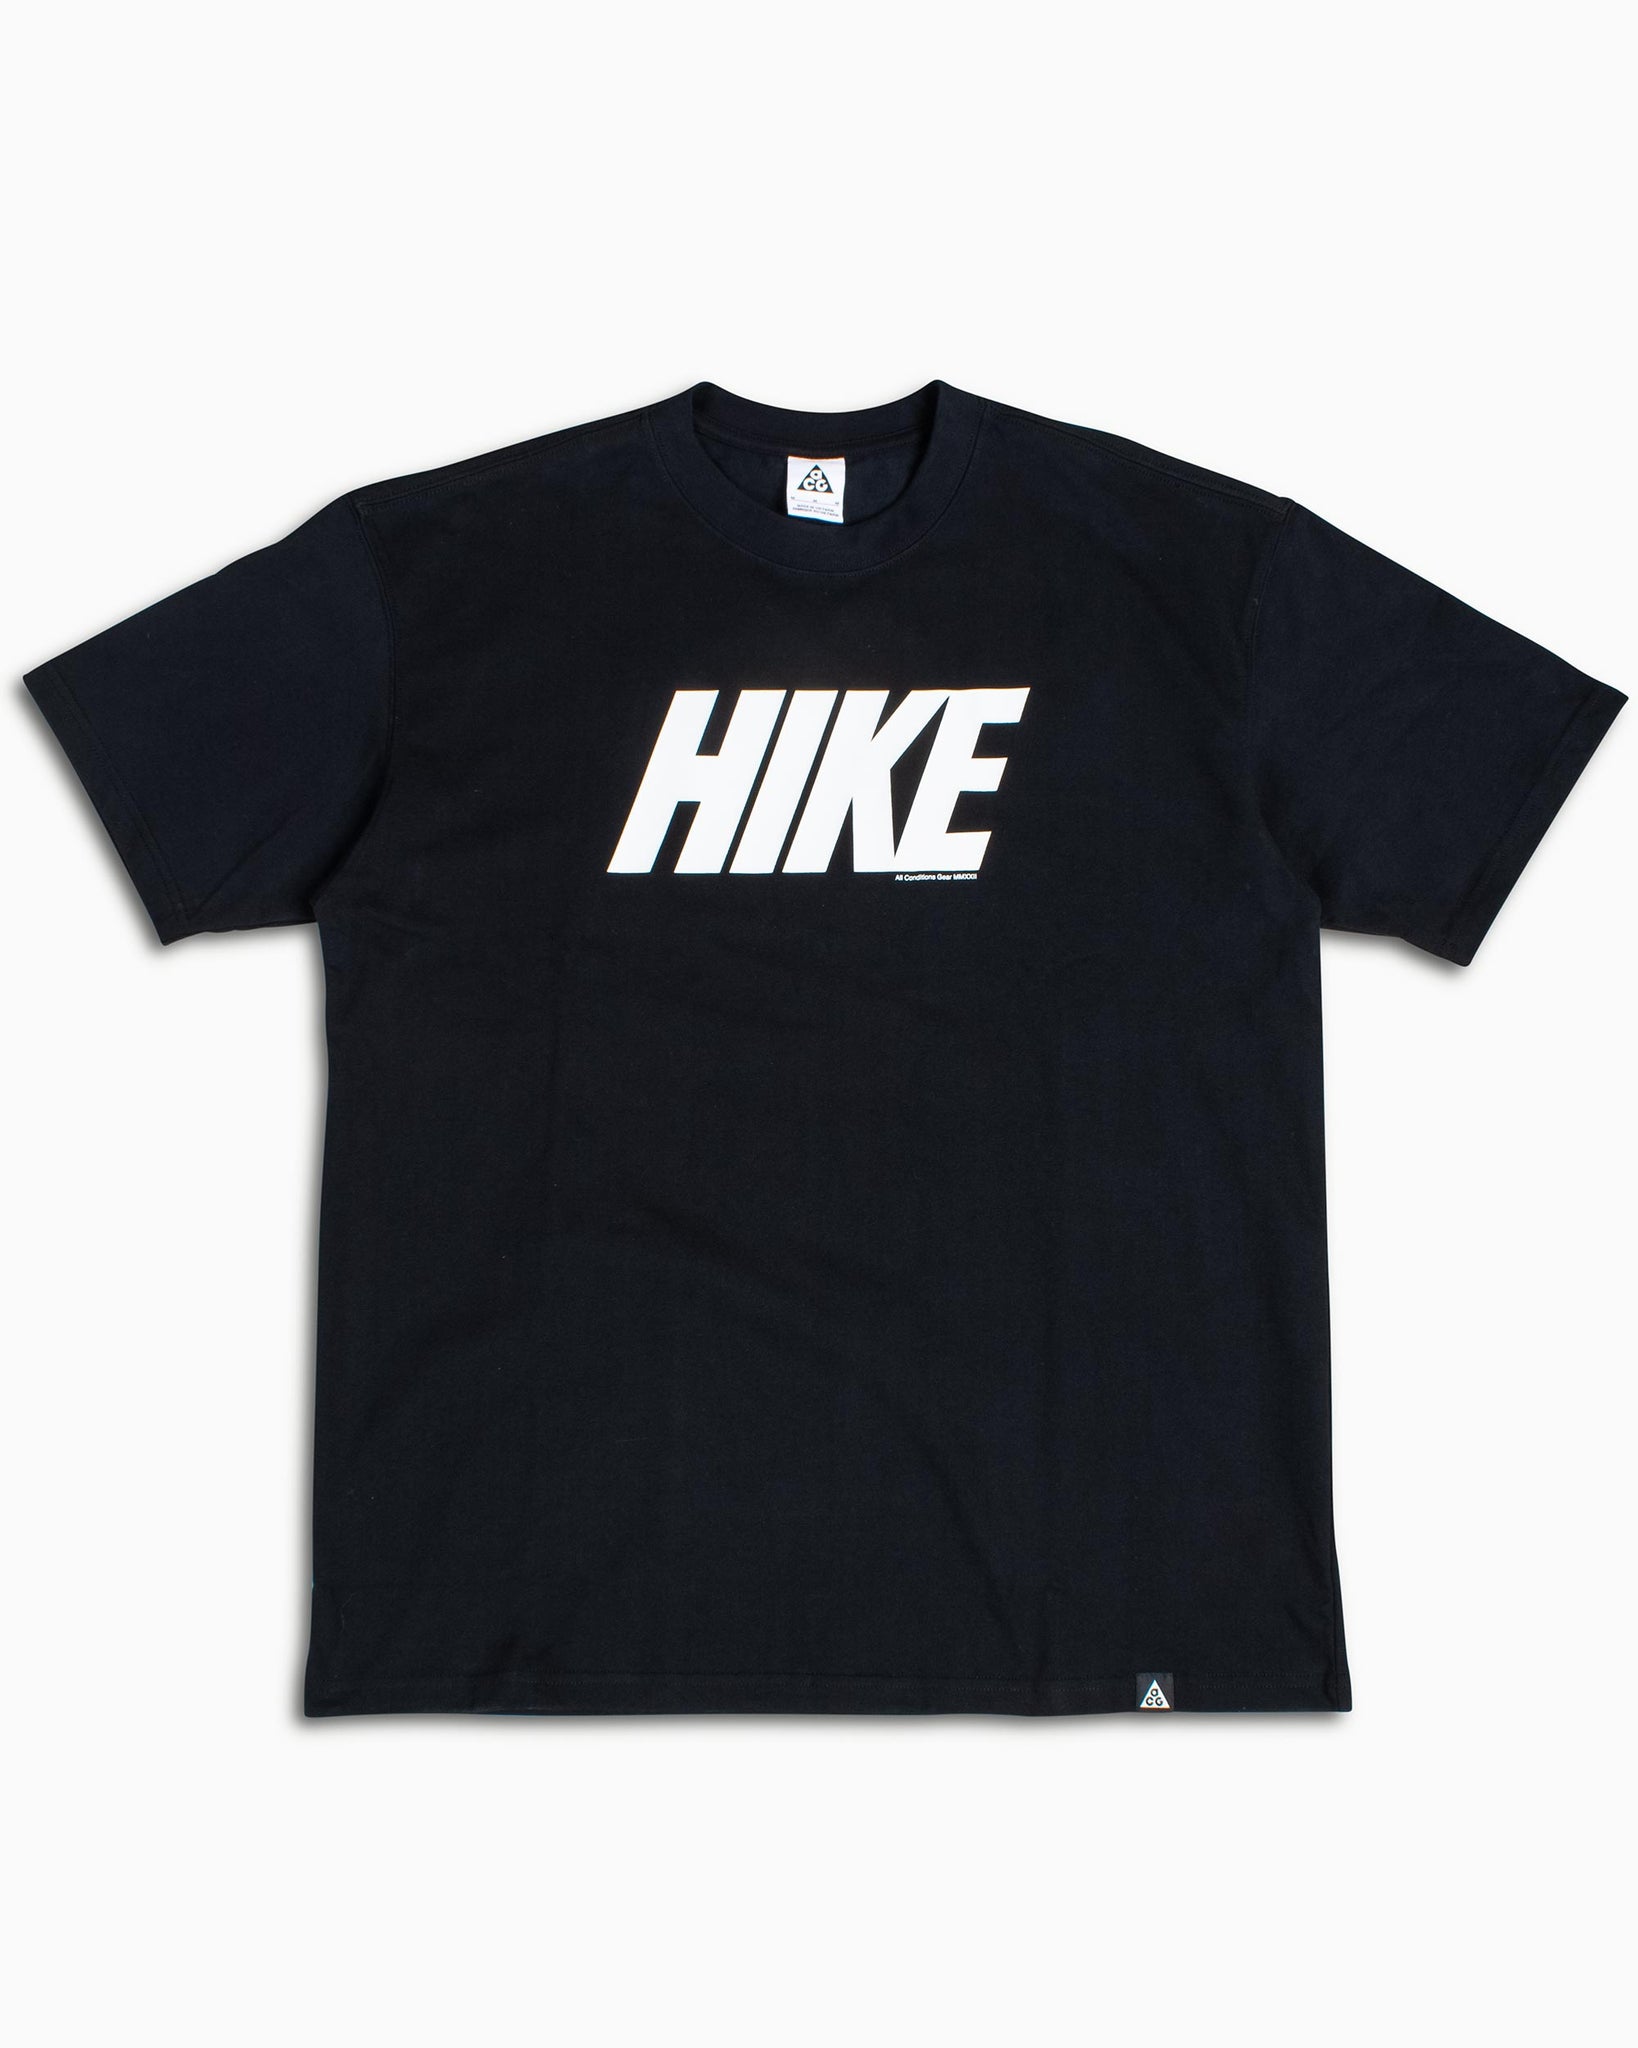 Nike ACG 'HIKE' T-Shirt Black